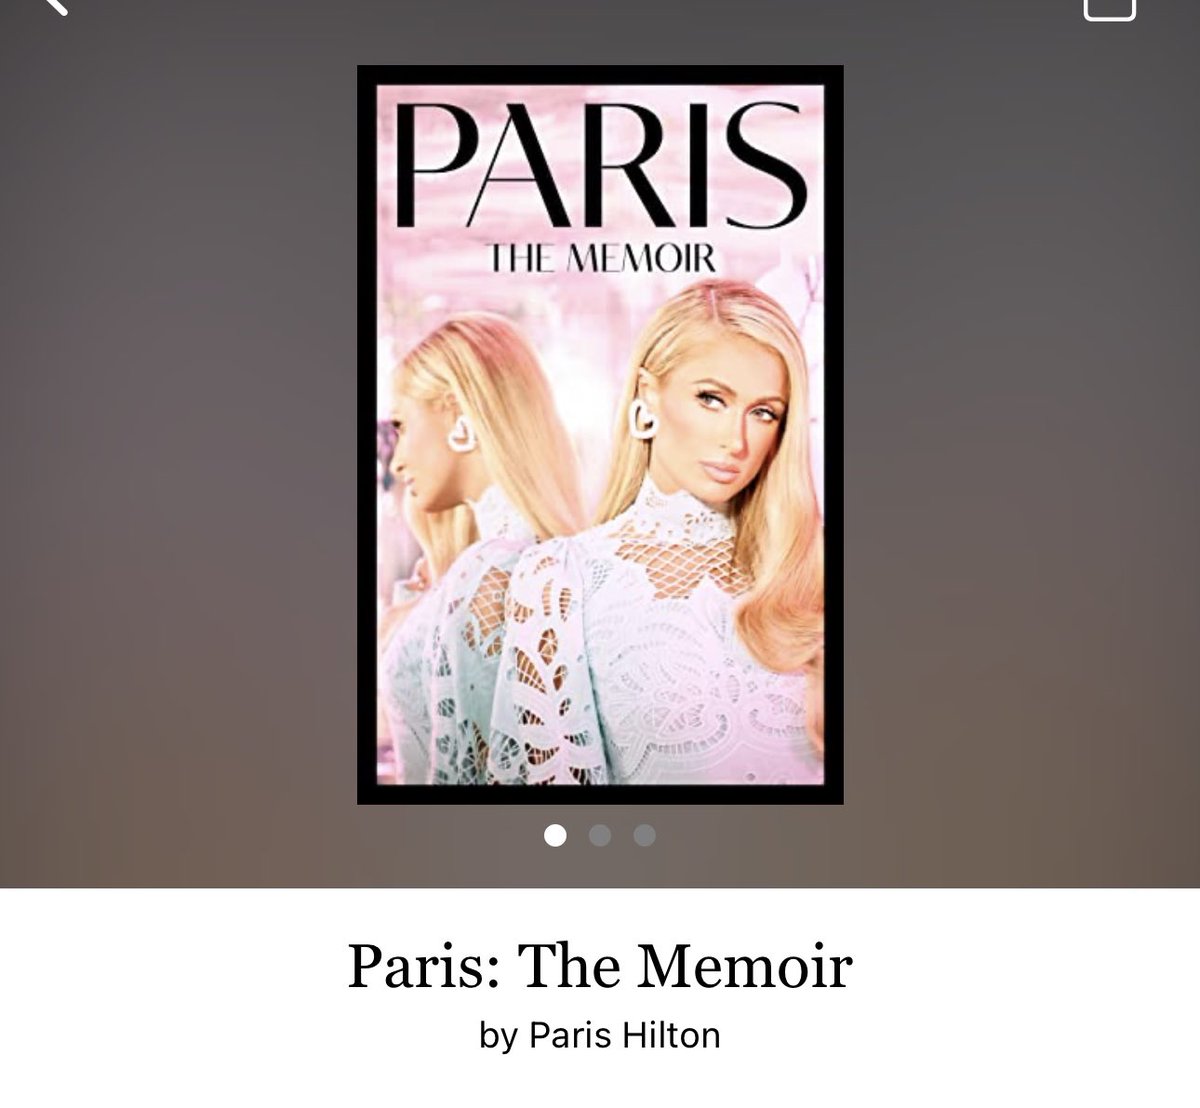 Paris by Paris Hilton 

#Paris by #ParisHilton #5018 #21chapters #336pages #561of400 #NewRelease #audiobook #23for6 #8hourAudiobook #June2023 #clearingoffreadingshelves #whatsnext #readiitquick